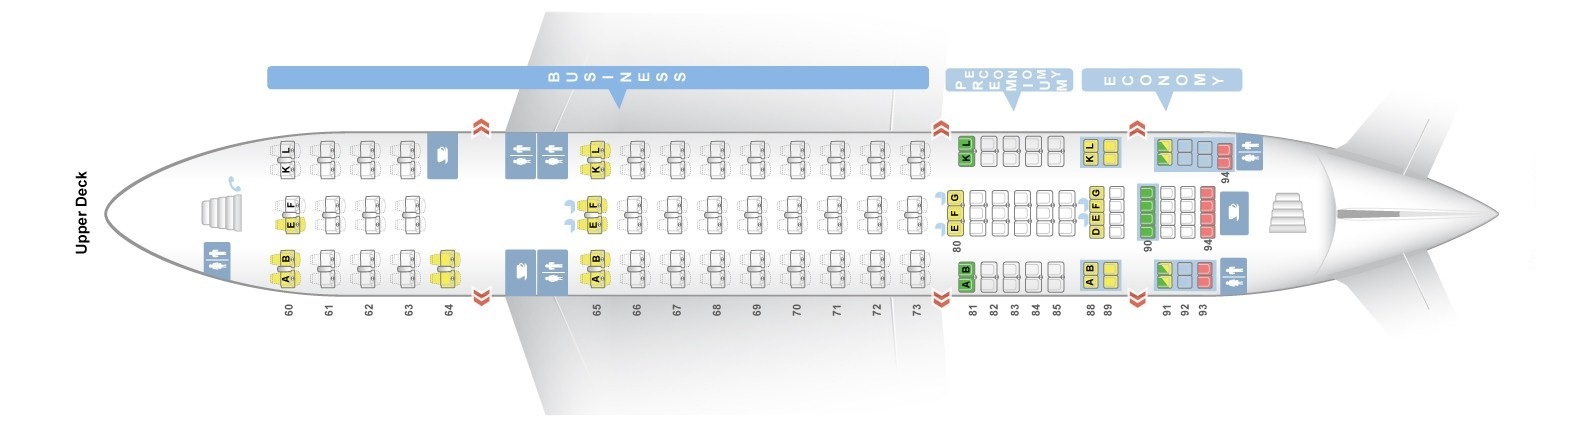 Air France A388 Seating Chart